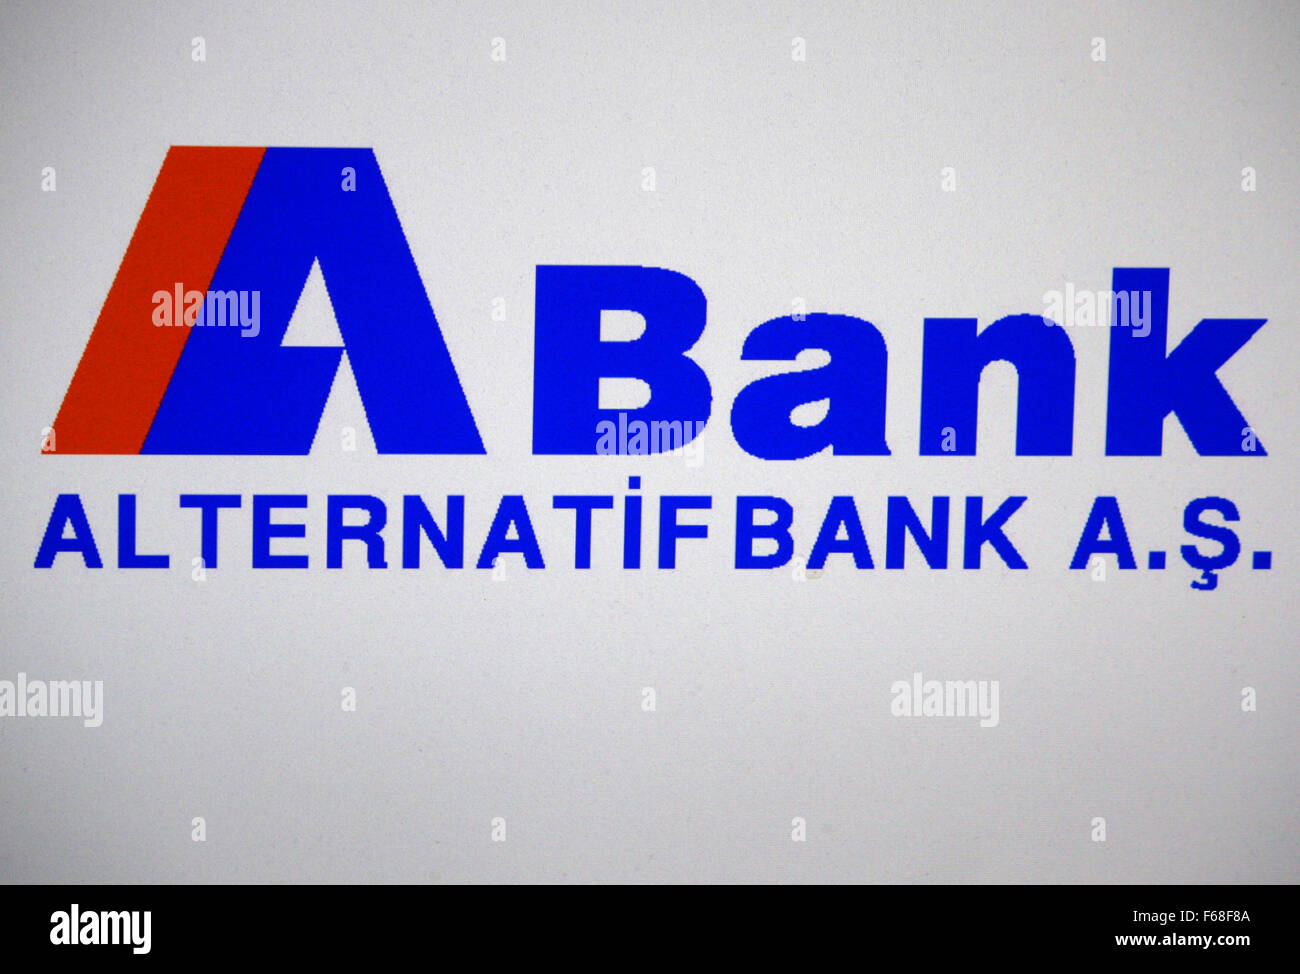 Markenname: "Alternatif Bank", Berlin. Stock Photo